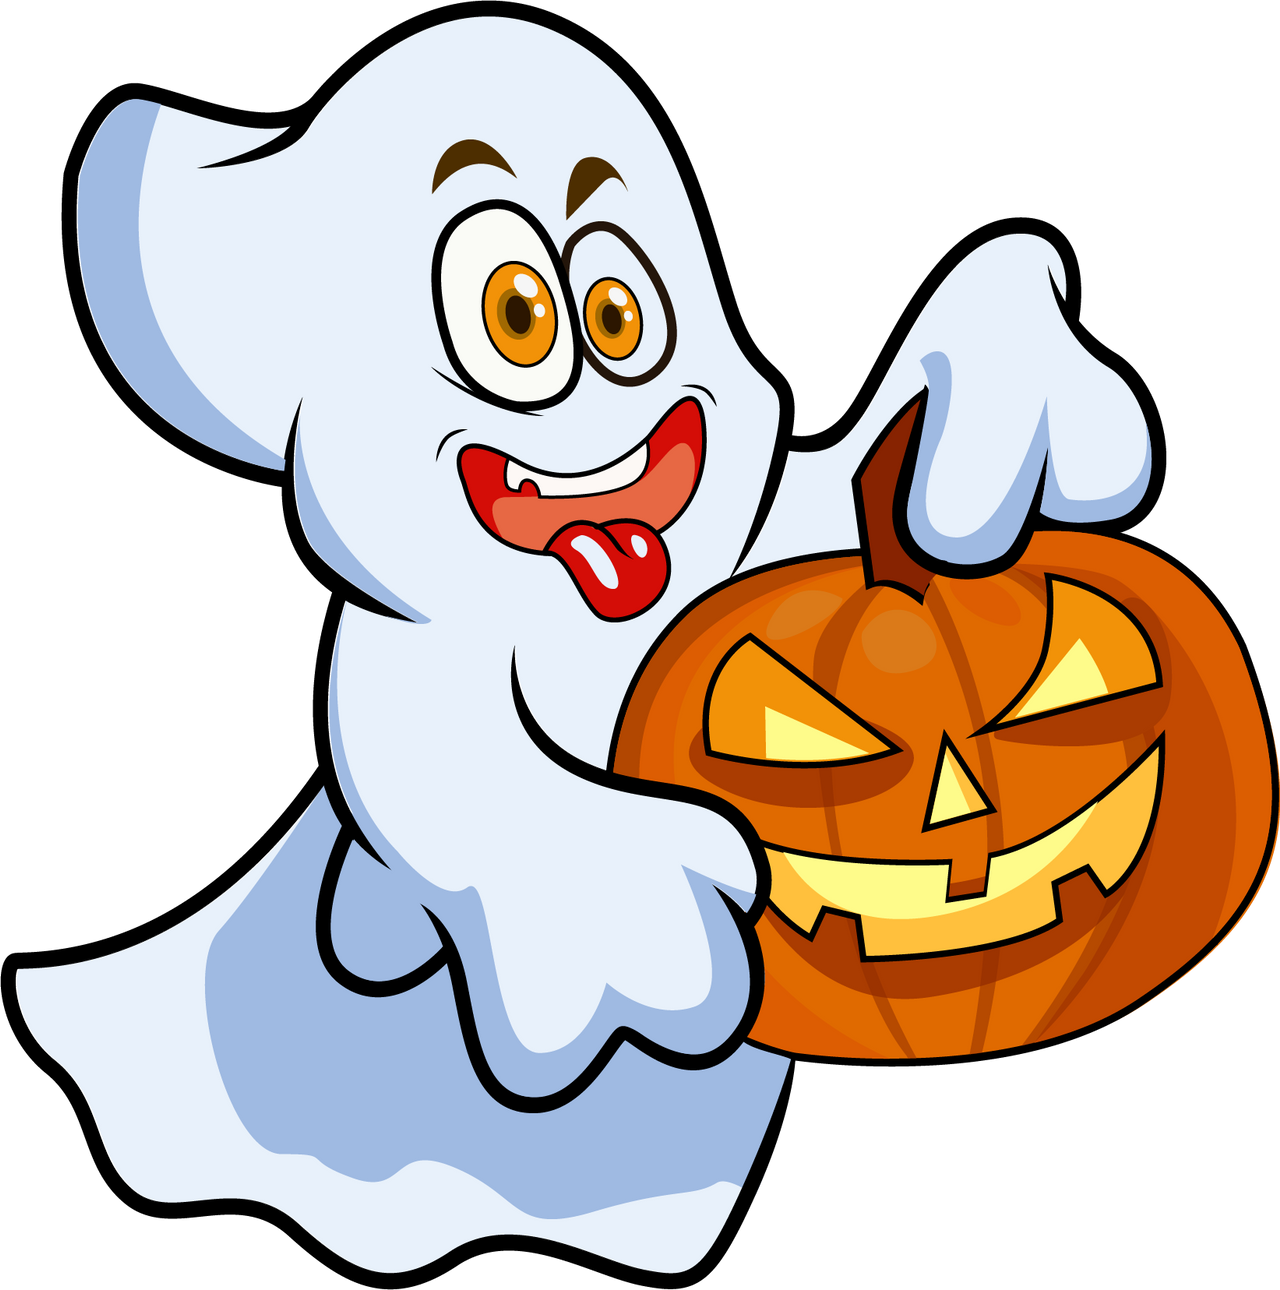 Halloween Scary Evil Pumkin Funny Pumkin Head 01 by ThilinaPrabhath on ...